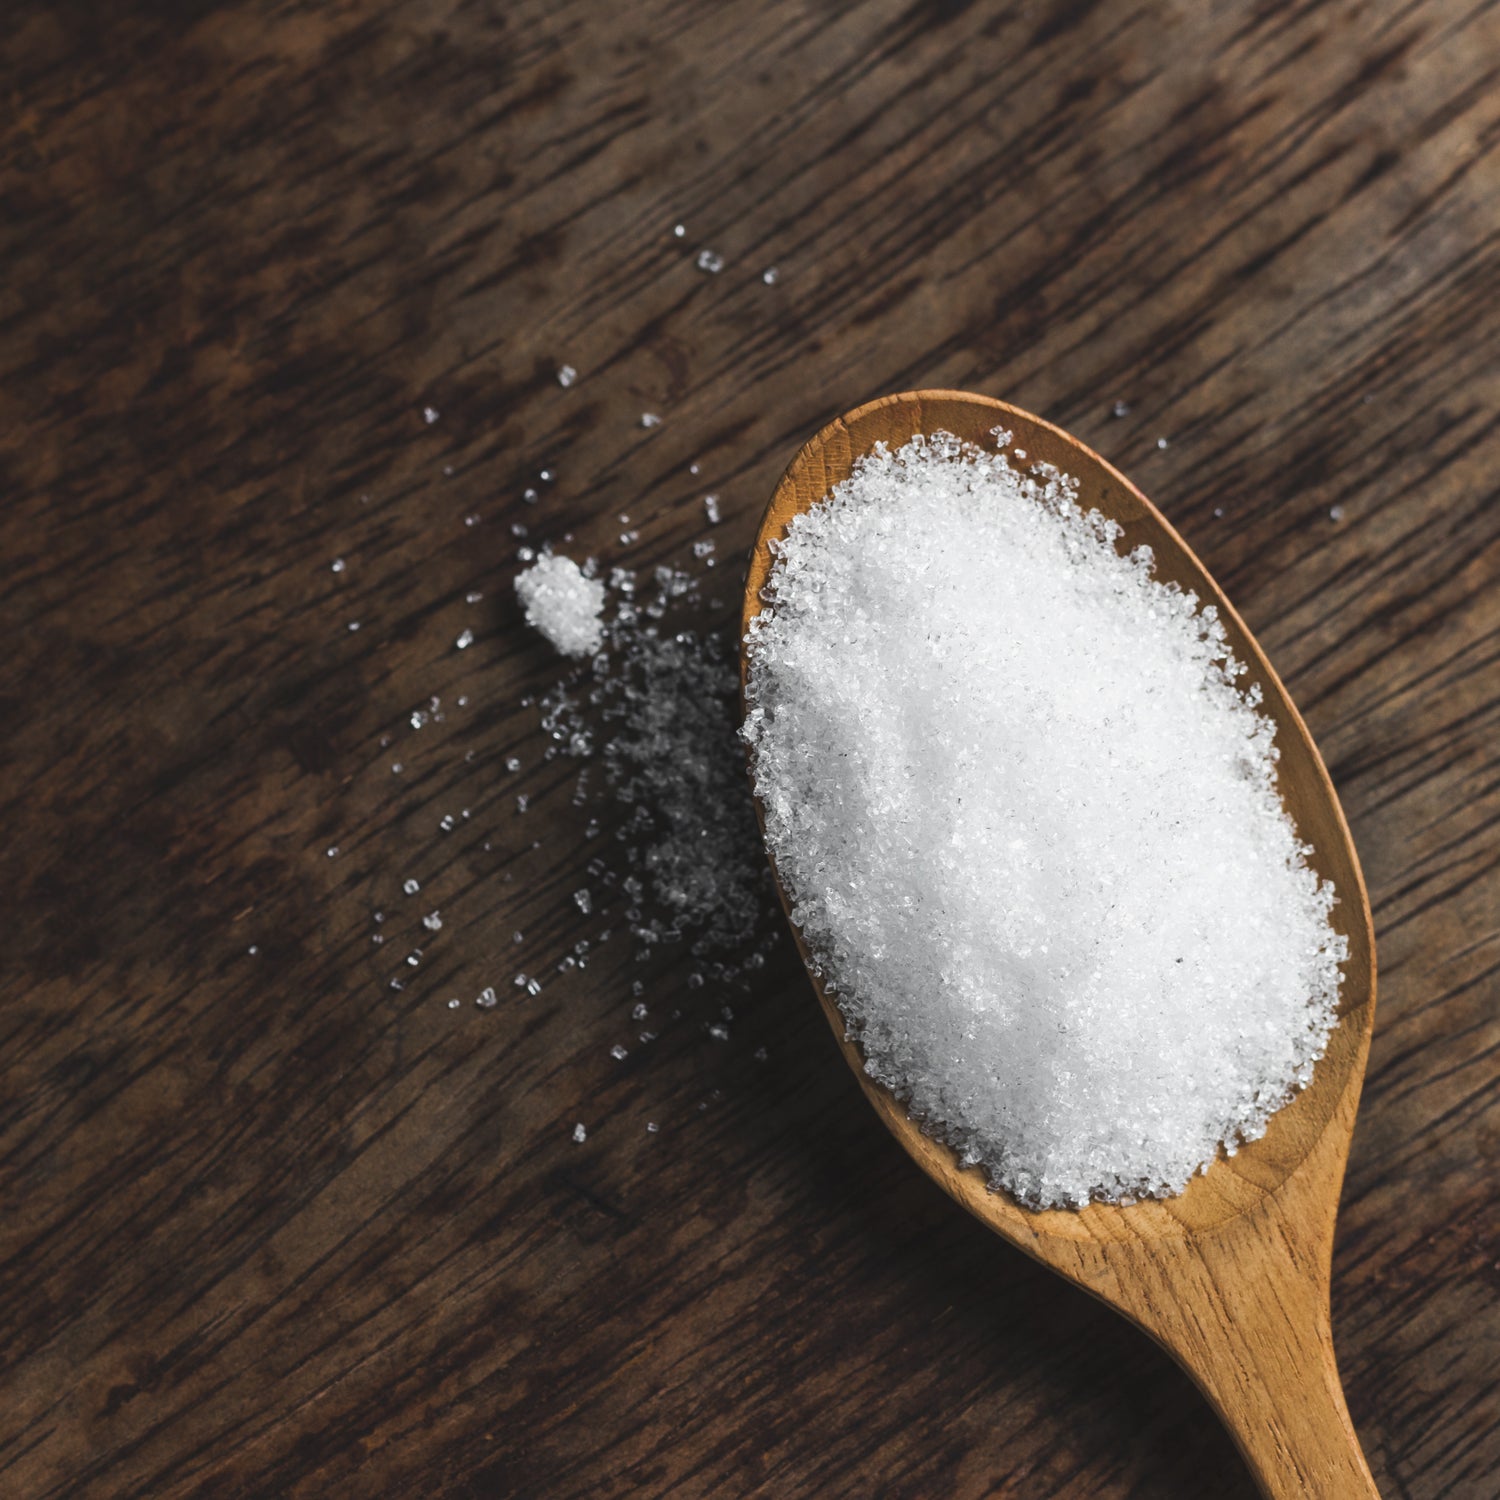 Does Sugar Affect Skin Health?